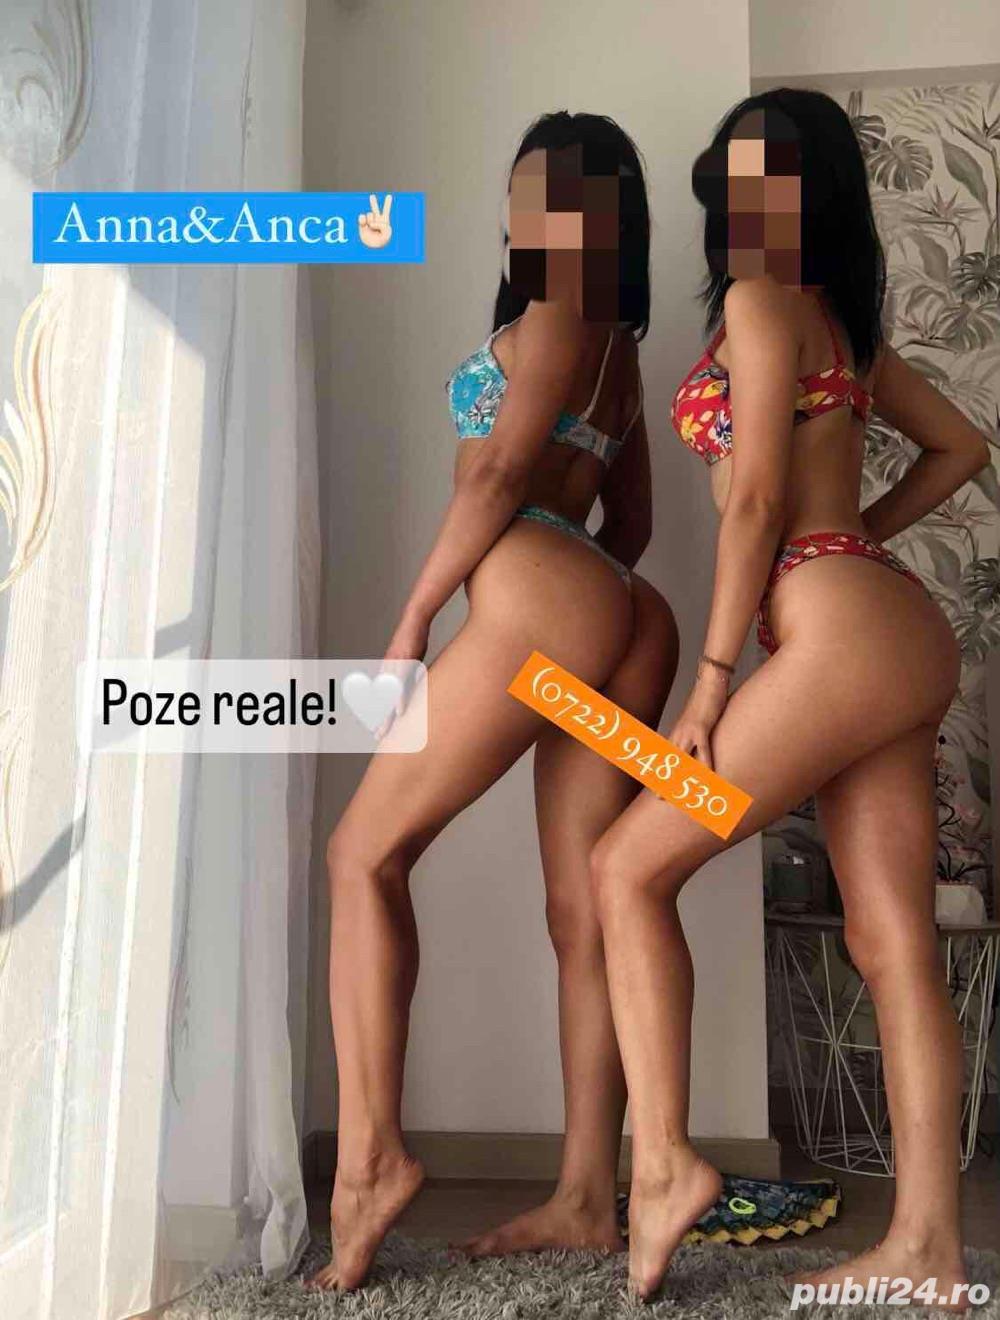 Anca&Anna  - imagine 4